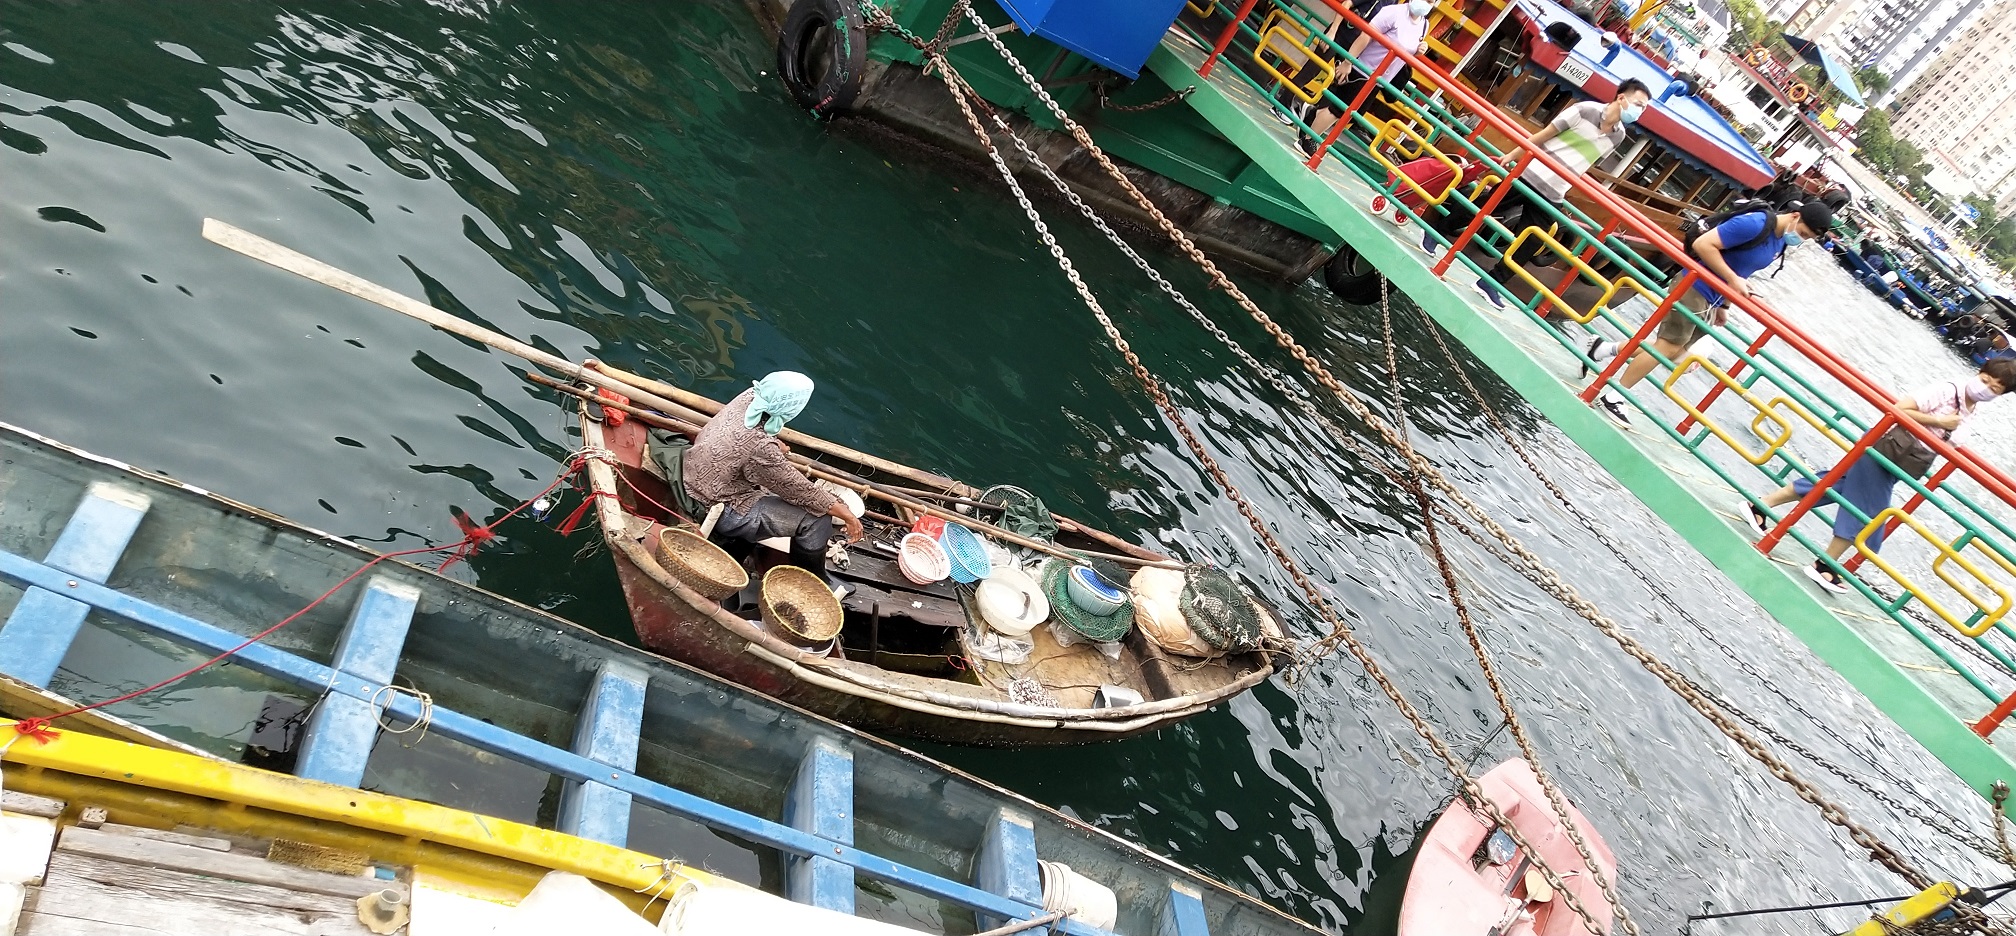 Fisherman is seeling fresh seafood to the public sampan passengers